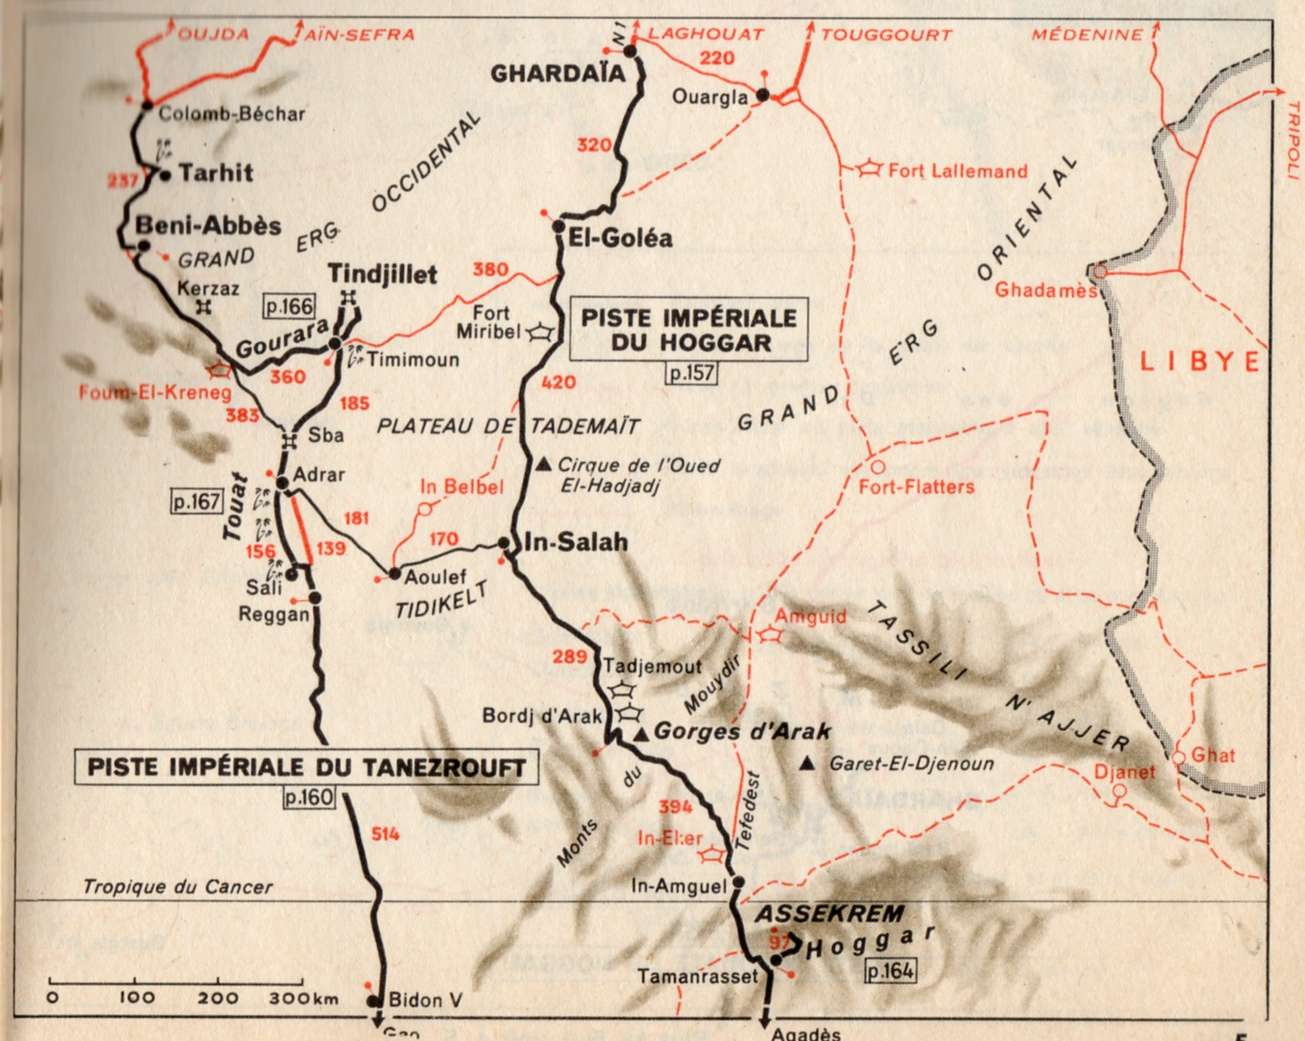 le sahara,carte selon guide vert michelin 1956,piste imperiales du hoggar et du tanezrouft